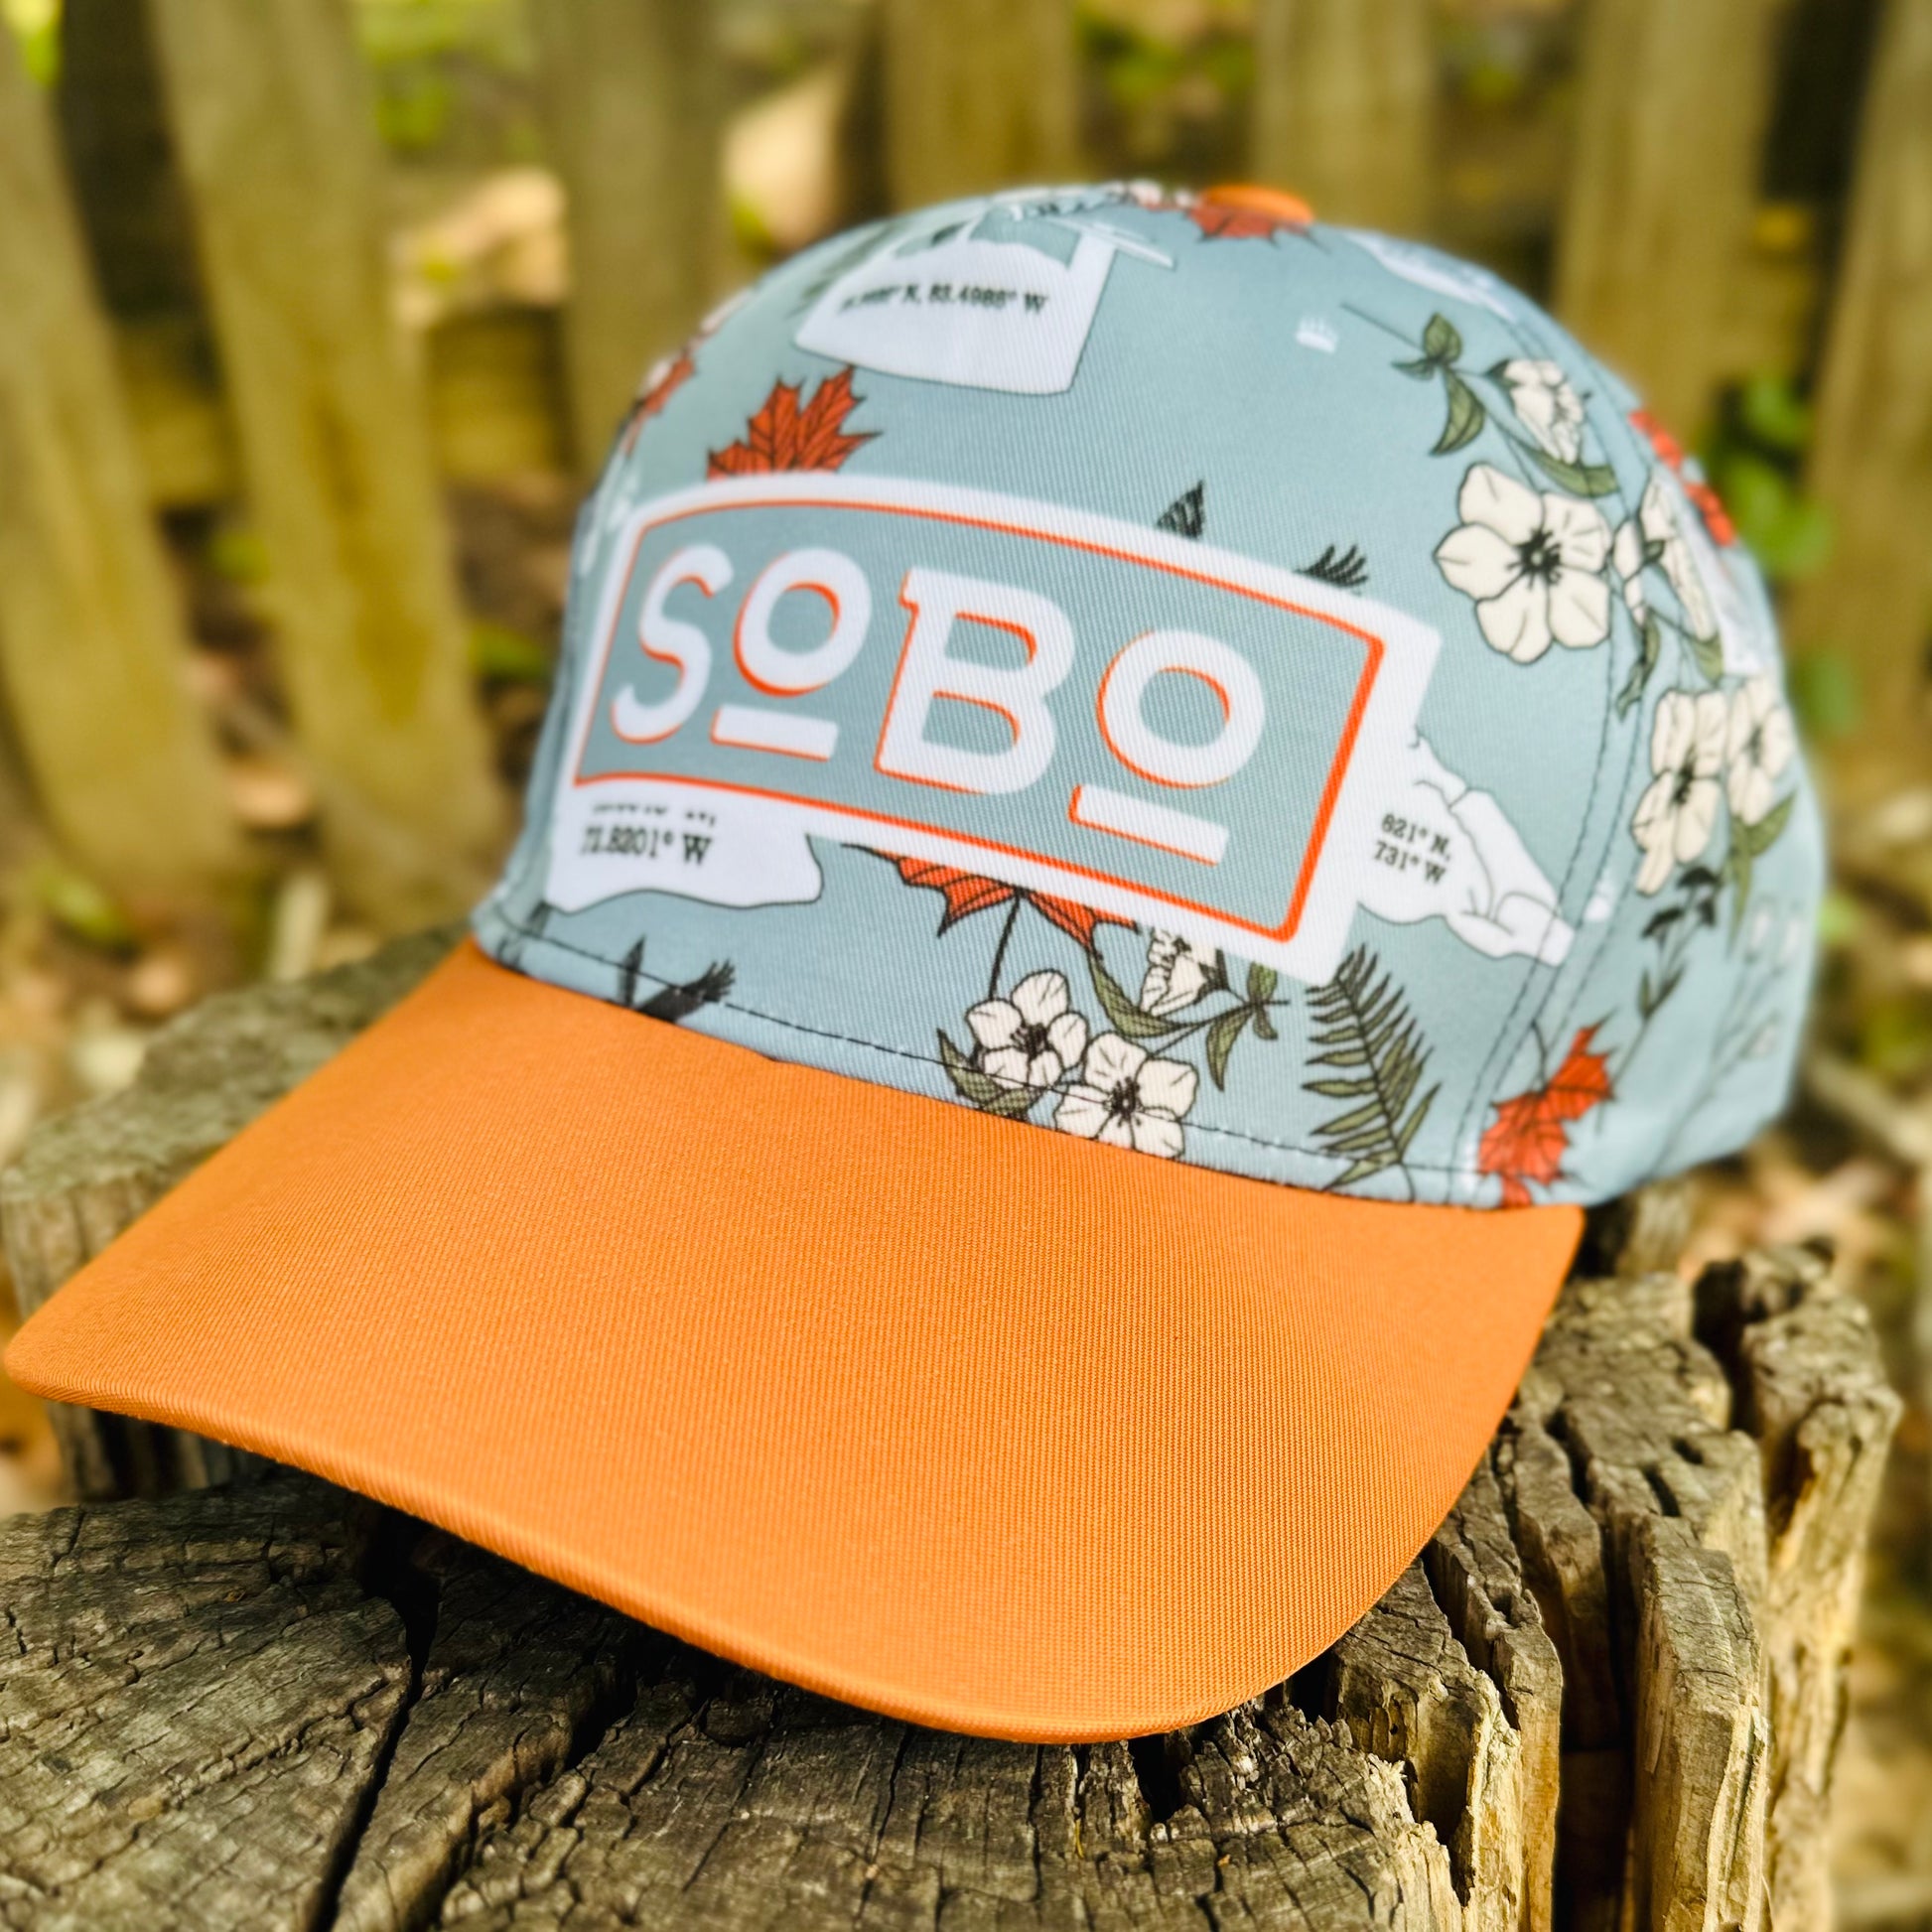 Sobo Appalachian Trail Hat - Thru Hiker Retro Snapback Cap 